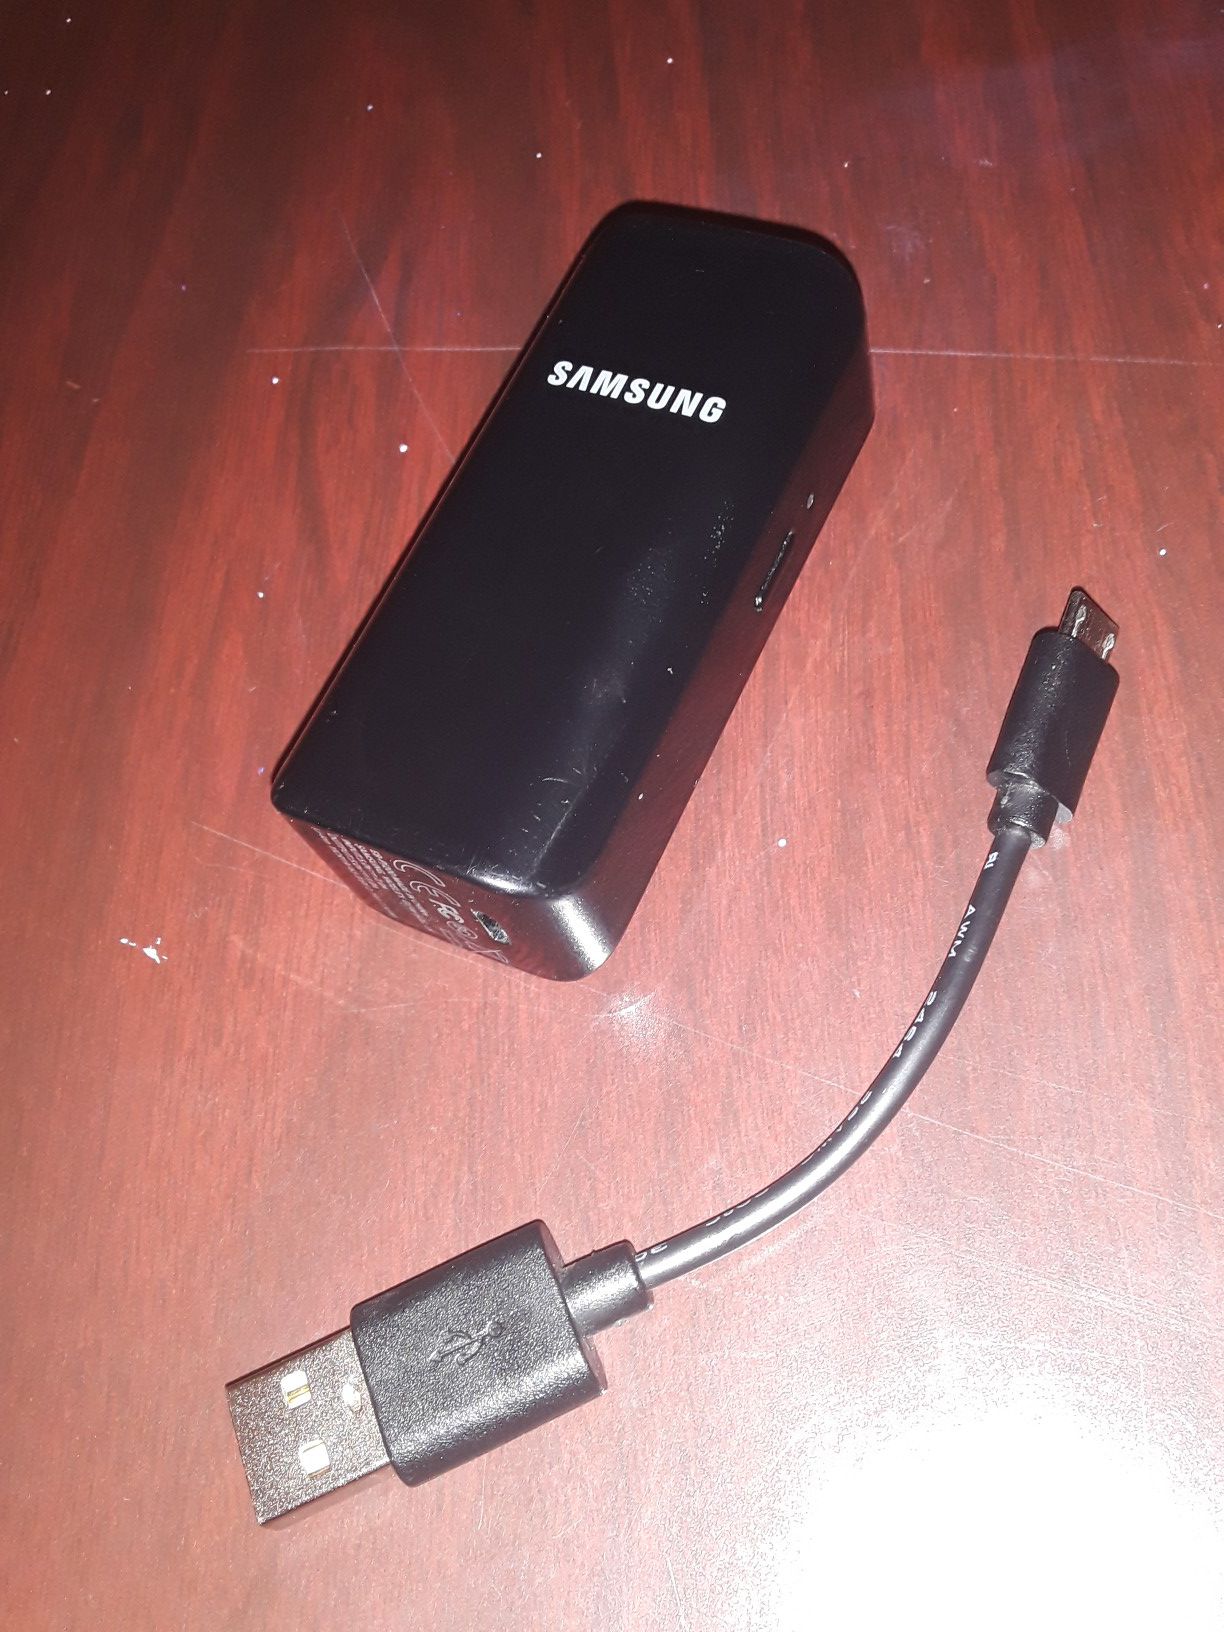 Portable Samsung charger